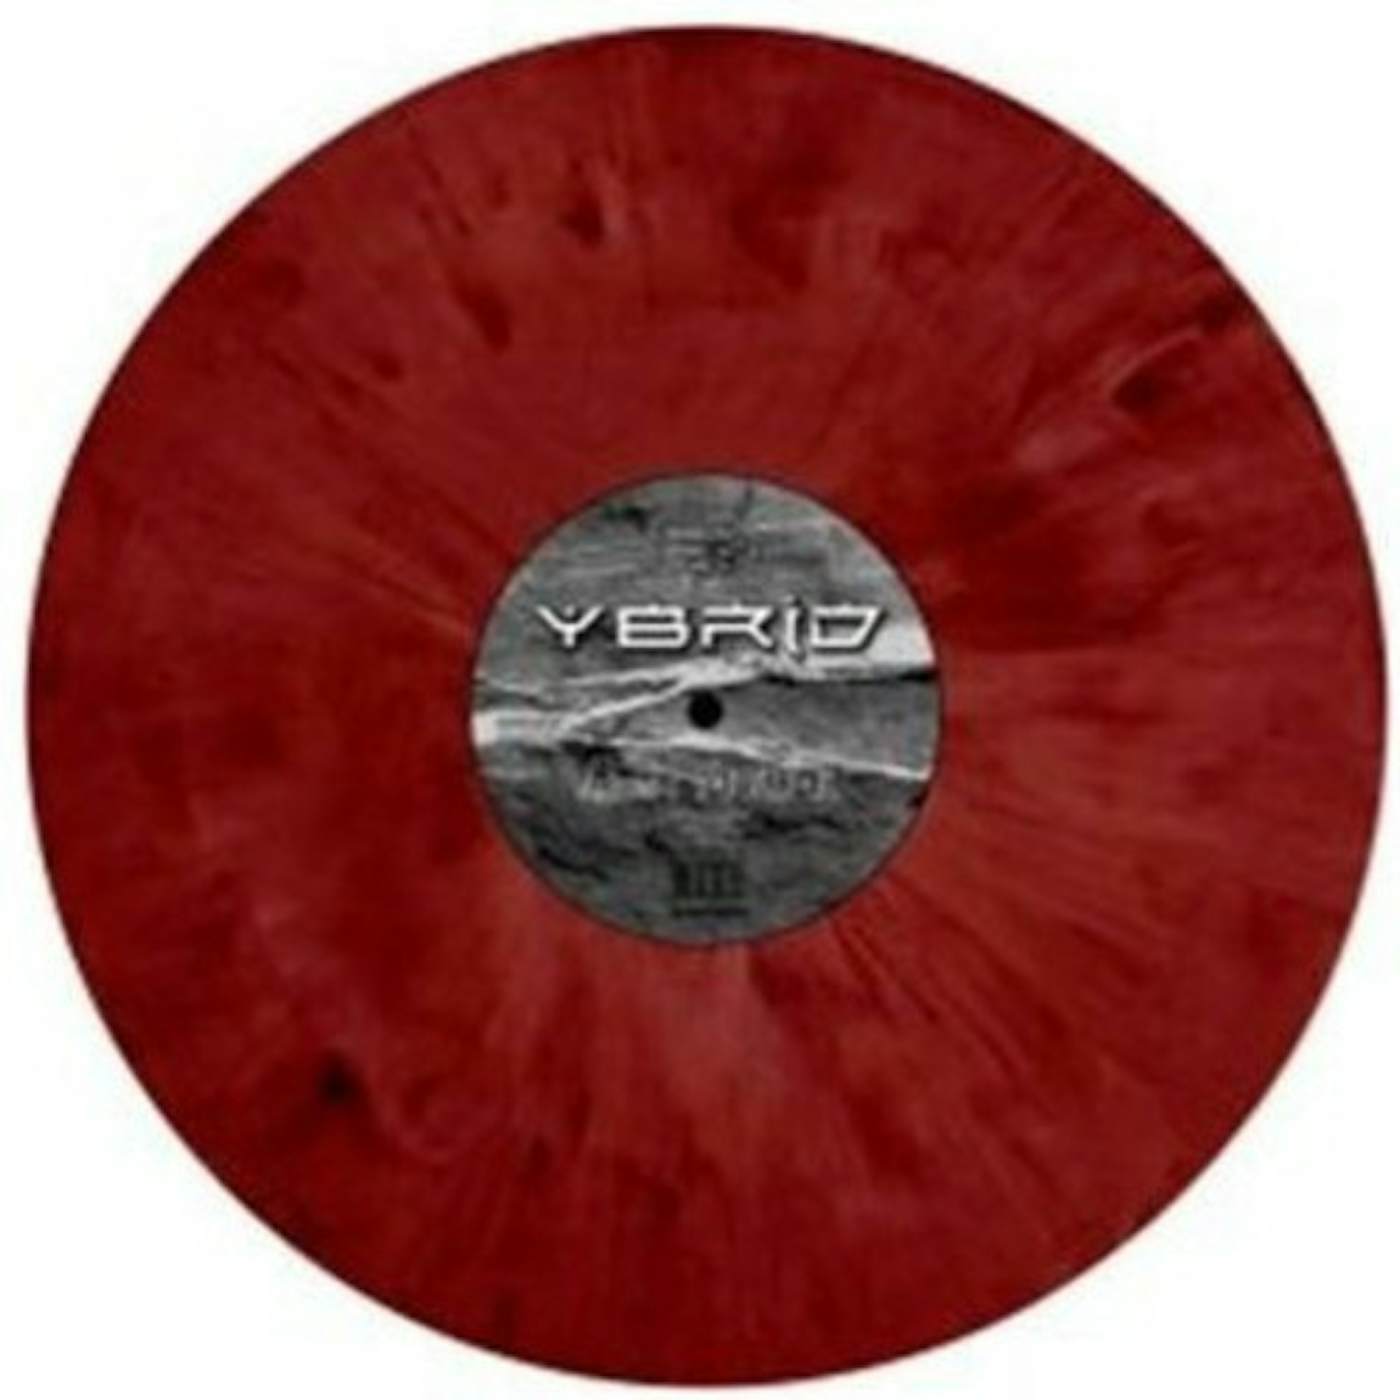 Ybrid YBORG Vinyl Record